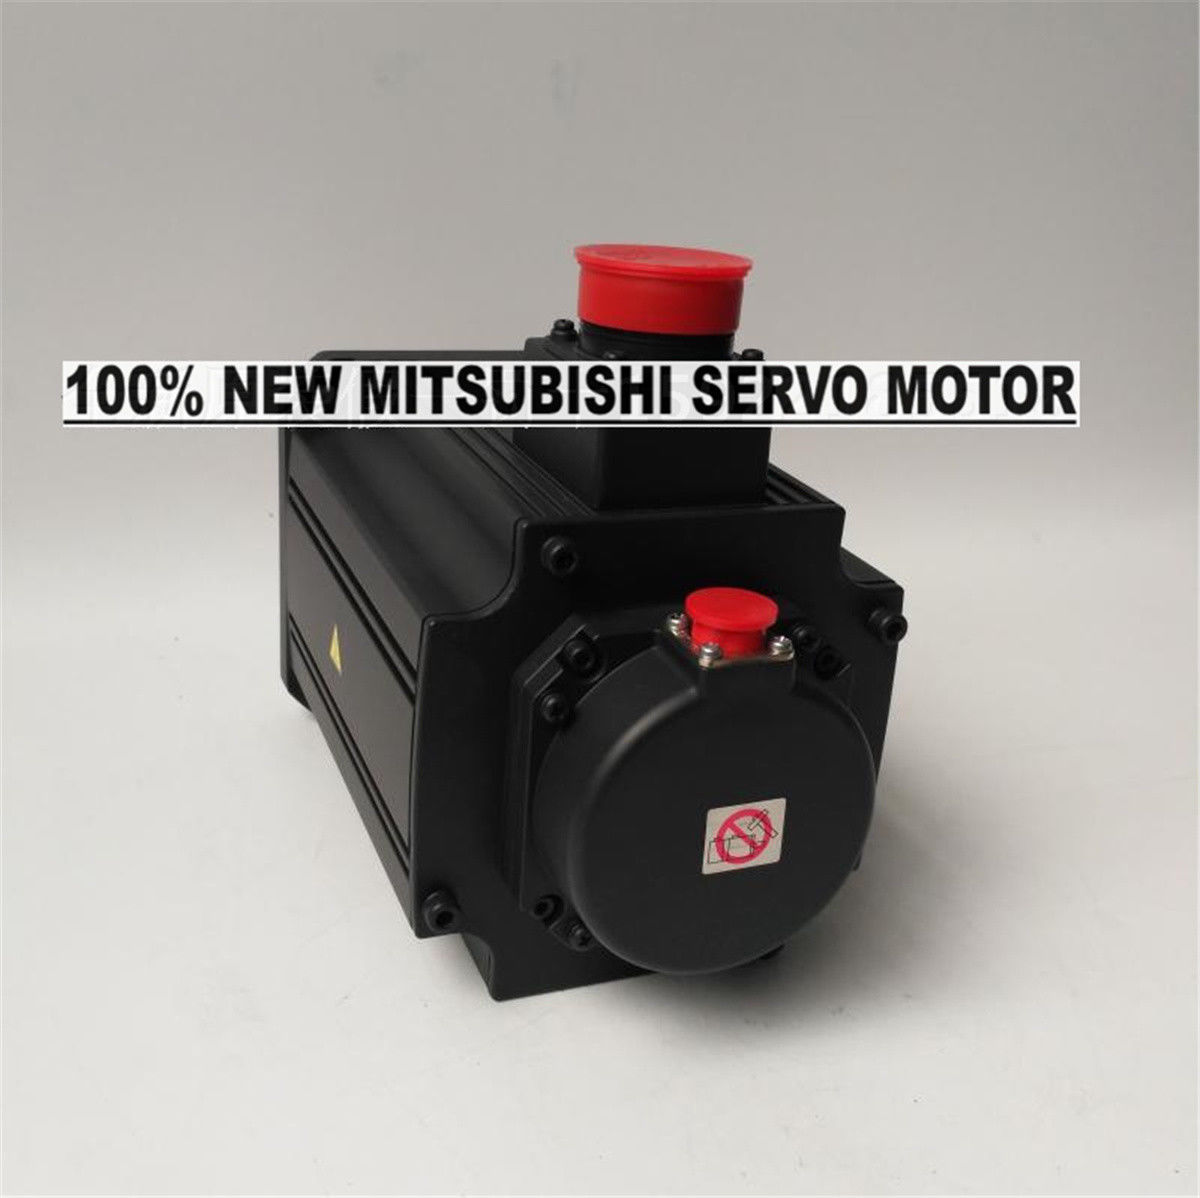 Brand NEW Mitsubishi Servo Motor HG-RR353 in box HGRR353 - Click Image to Close